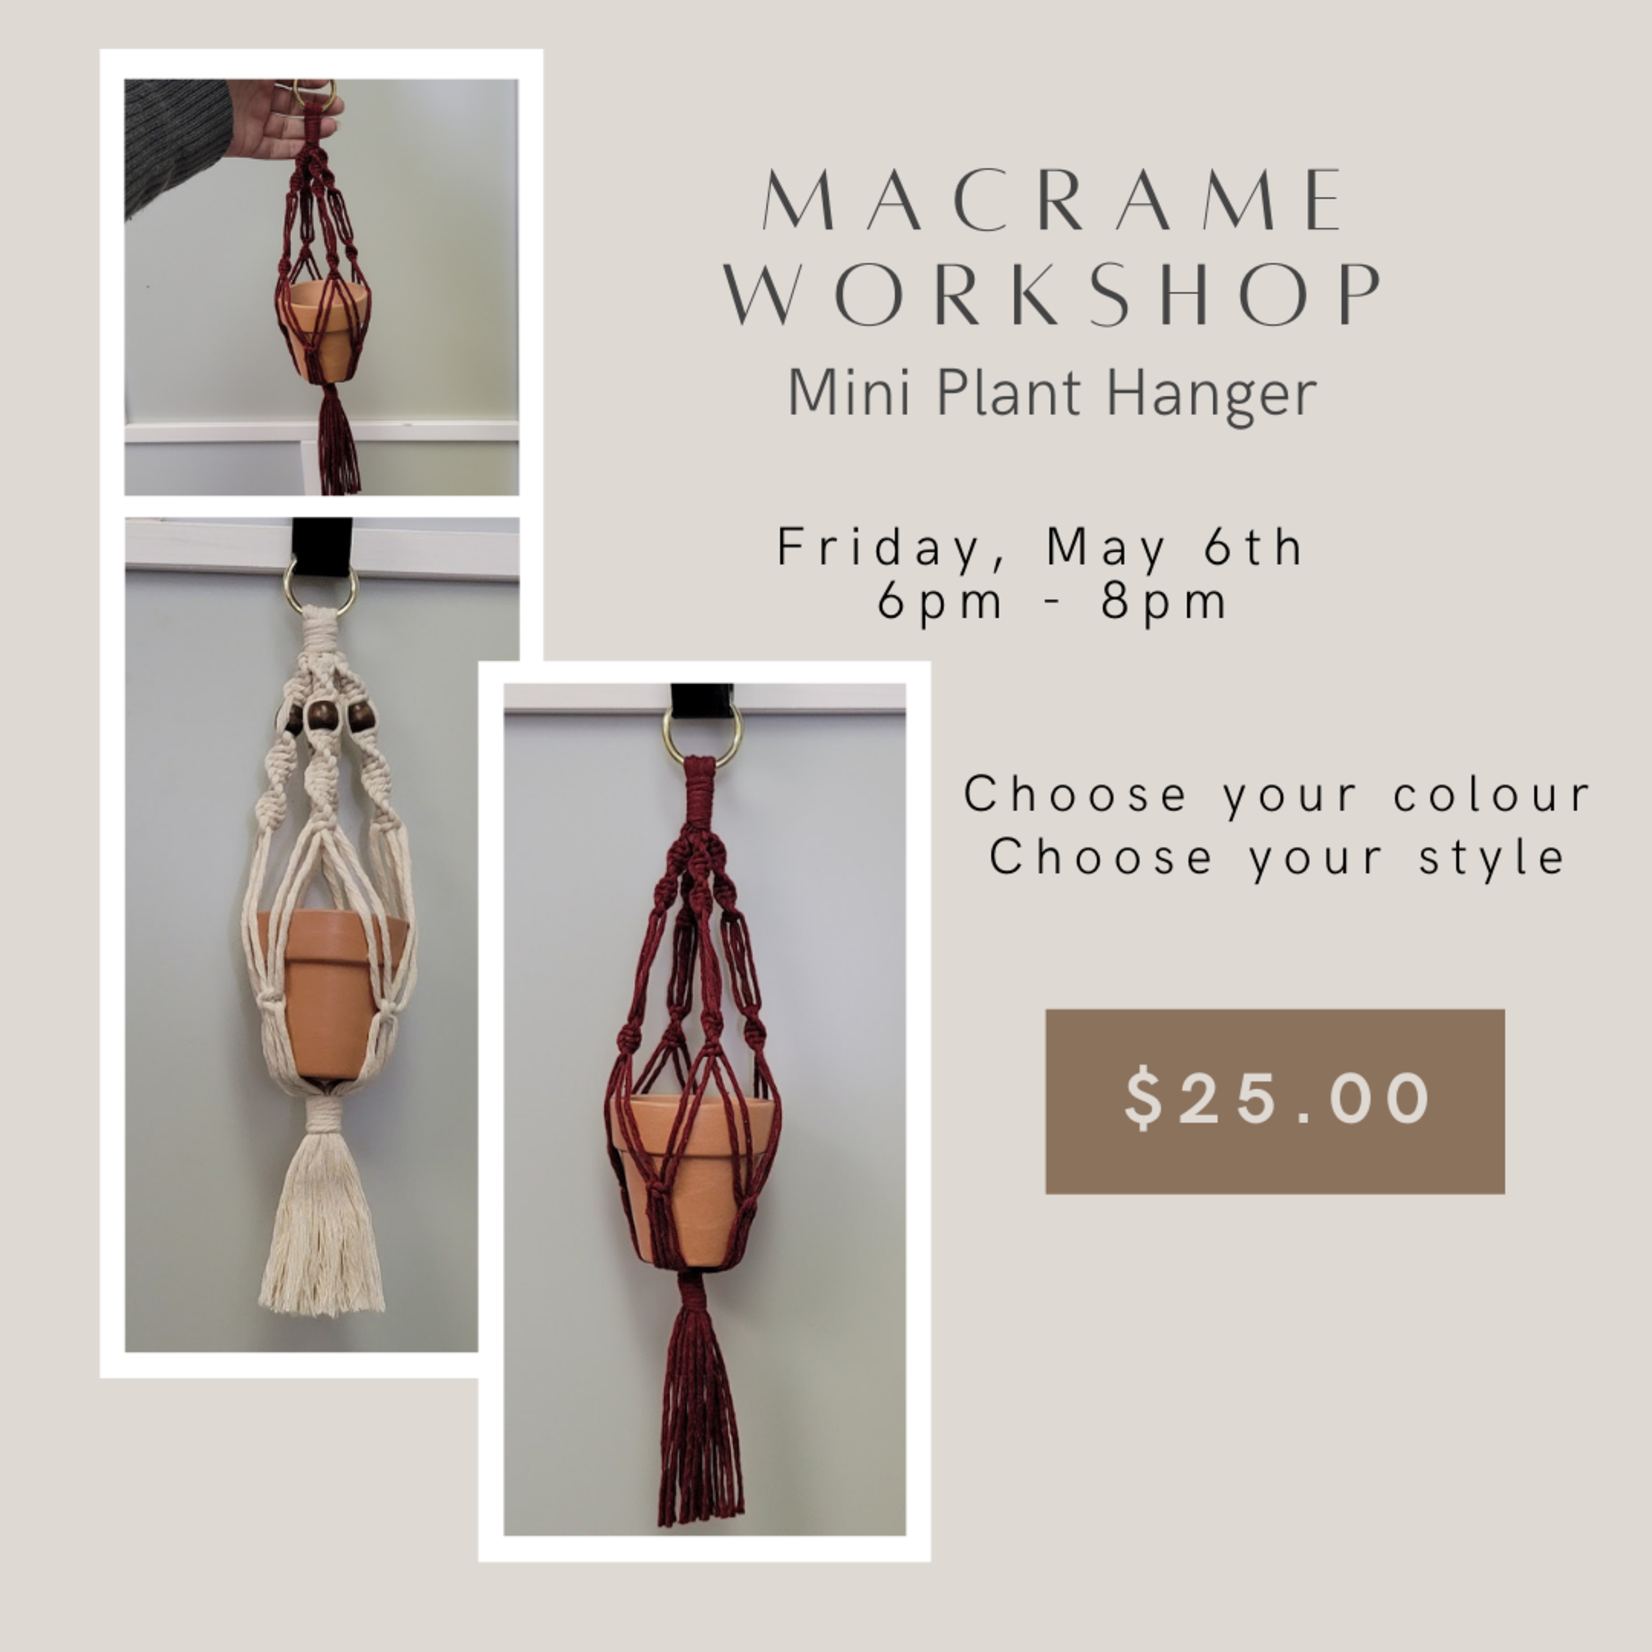 Macrame Workshop - Mini Plant Hanger - May 6th 2022